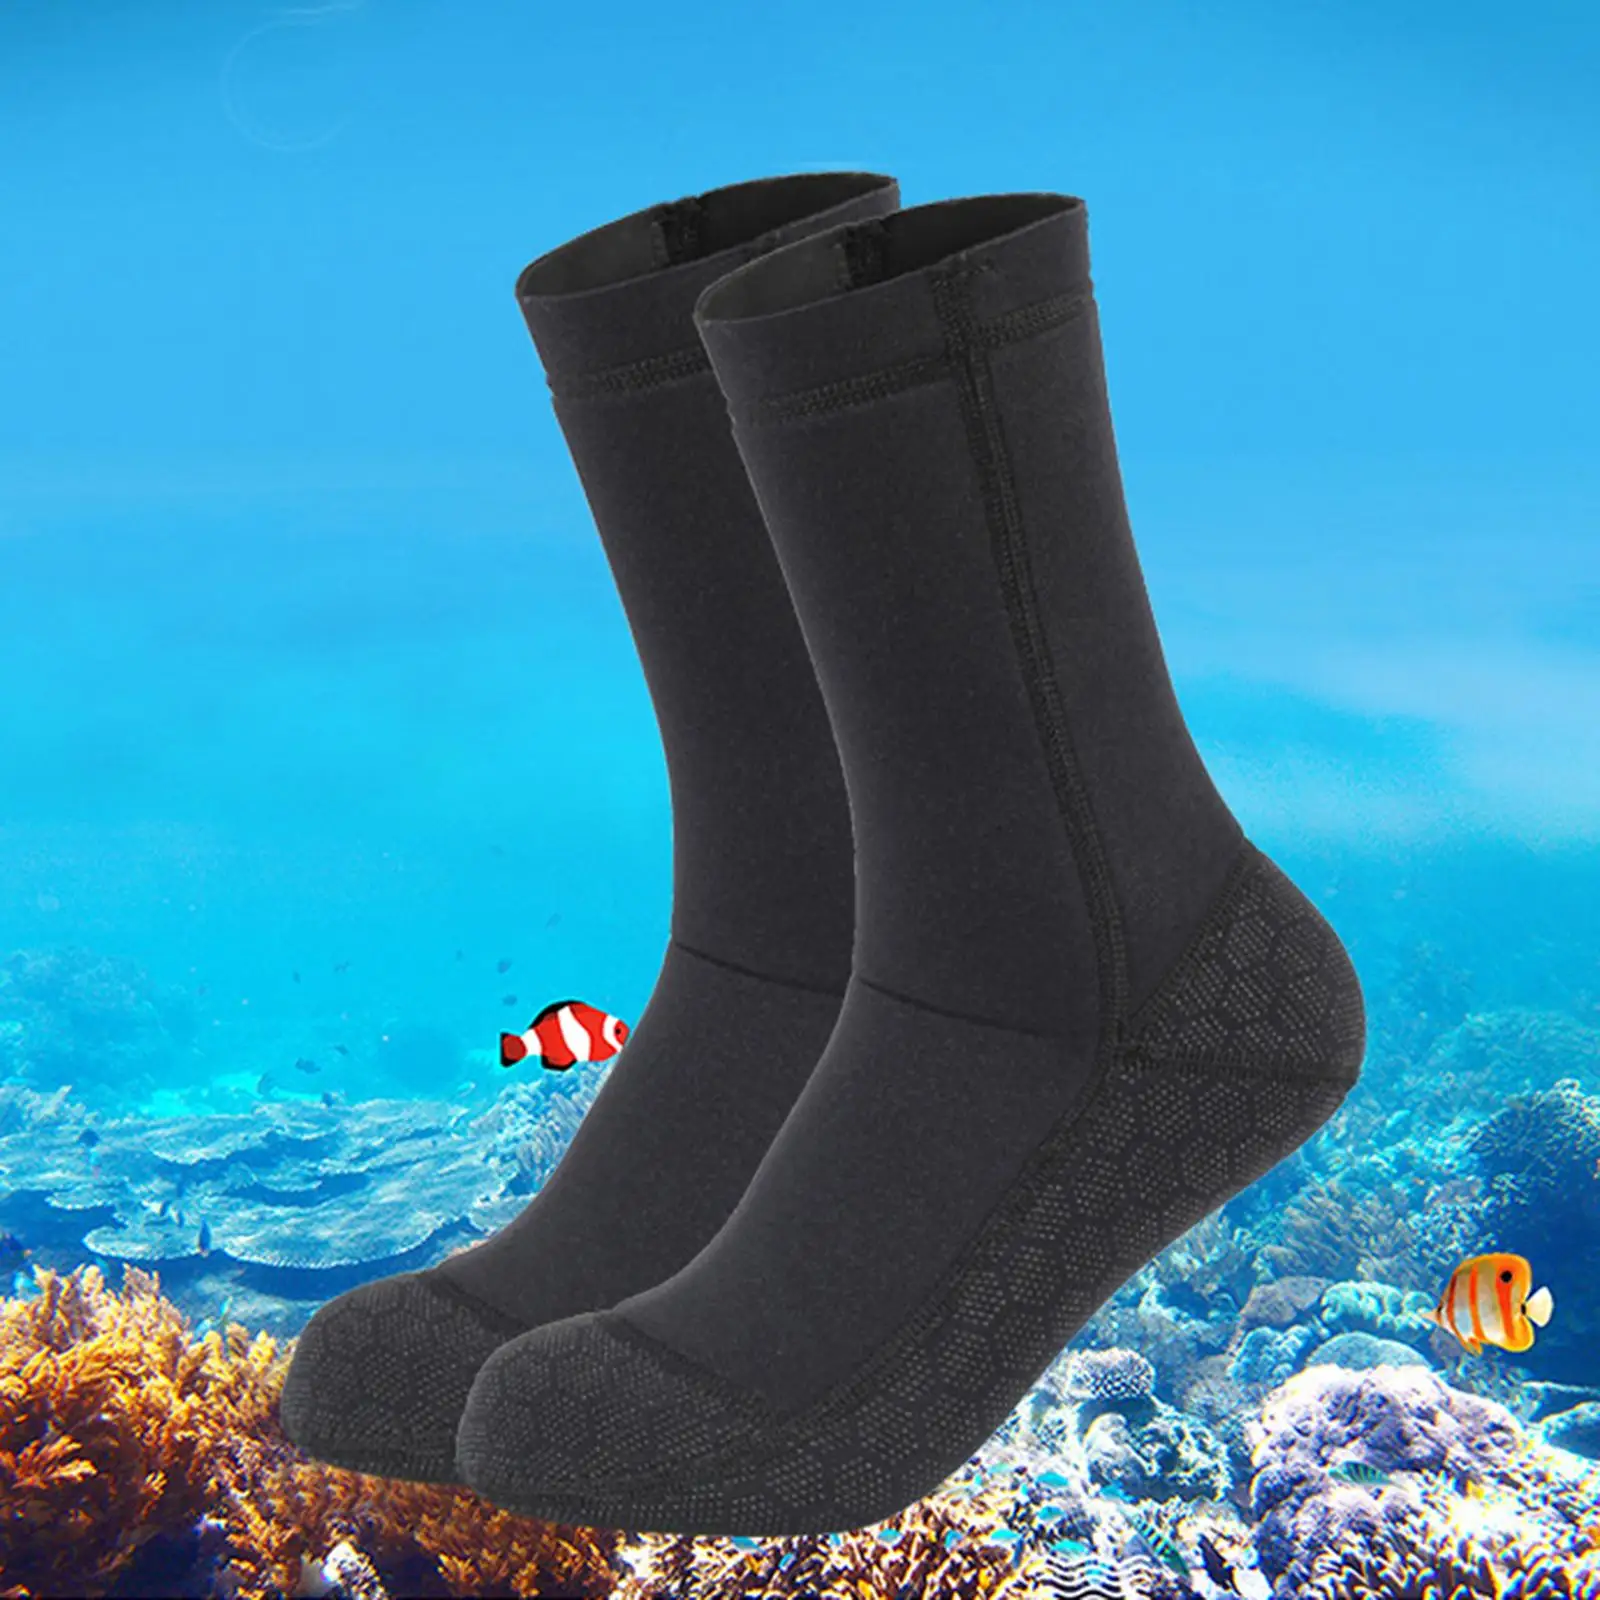 Diving Socks Flexible Warm Beach Fin Socks Sand Proof Water Socks Anti Slip for Water Sports Swim Kayaking Surfing Unisex Adult